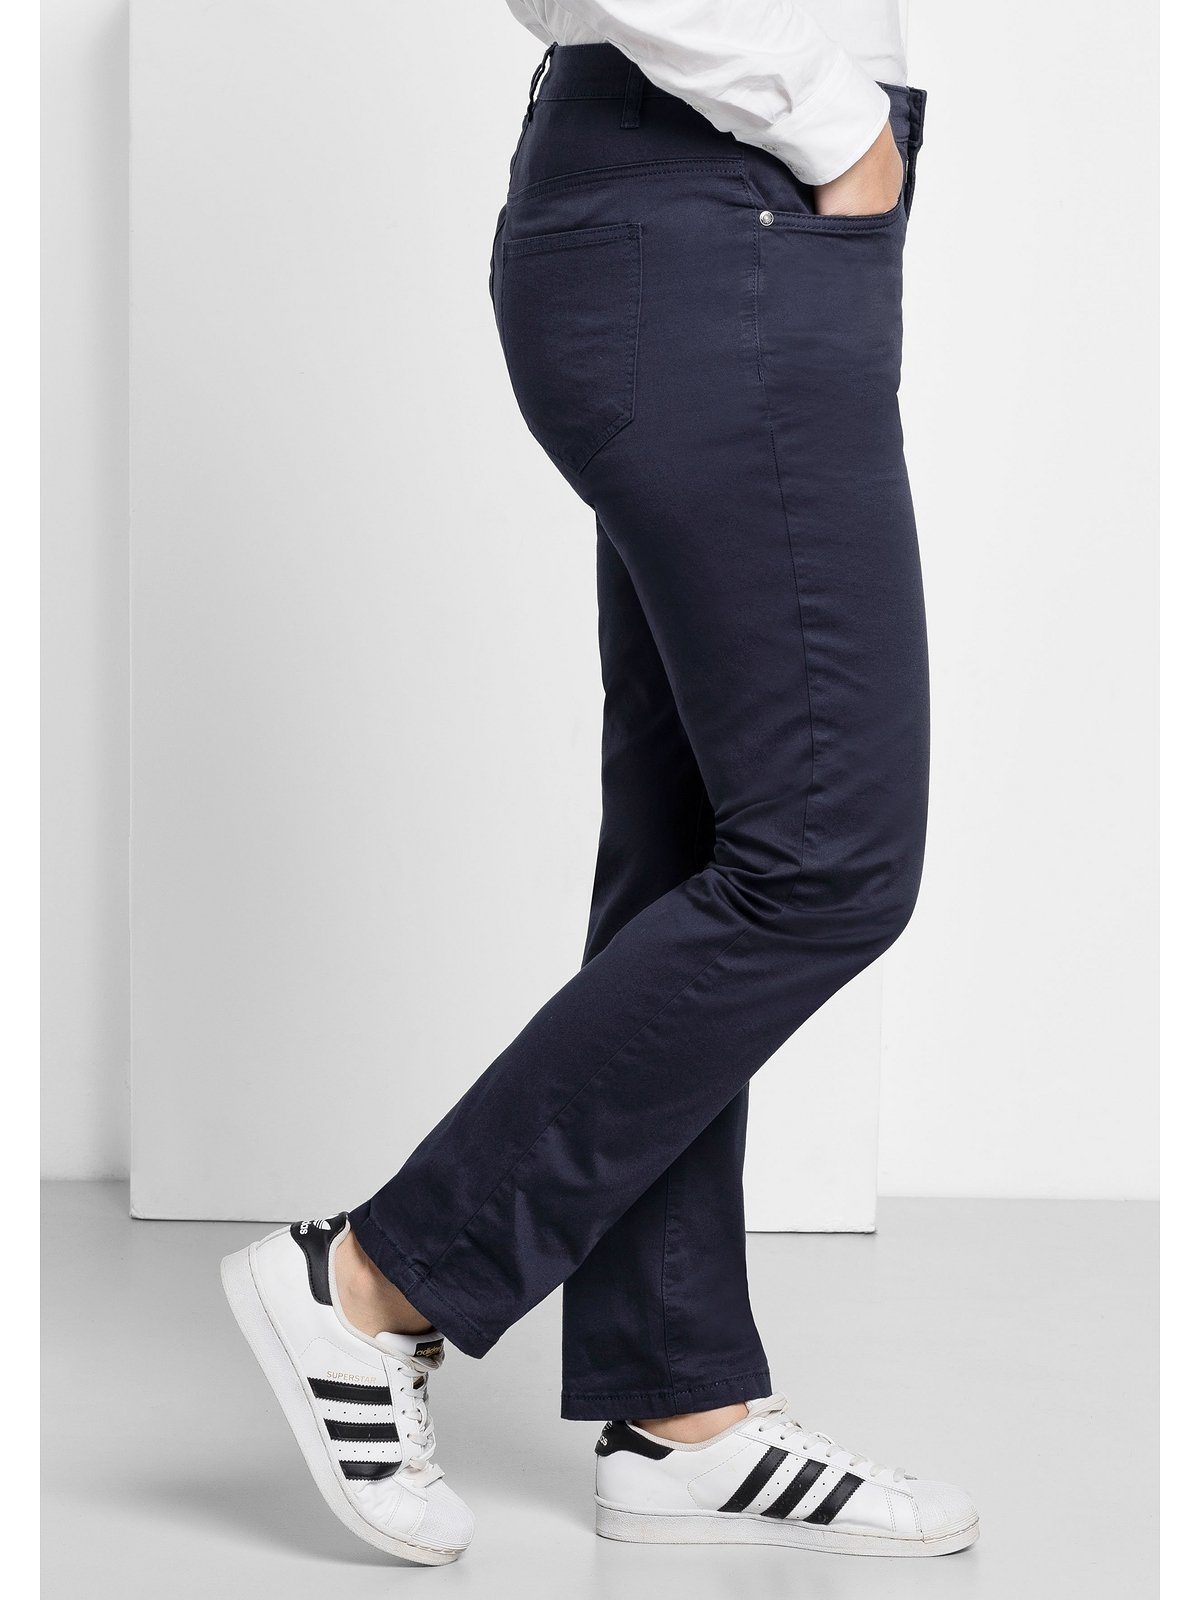 Damen Hosen Sheego Stretch-Hose Hose in schmaler Form